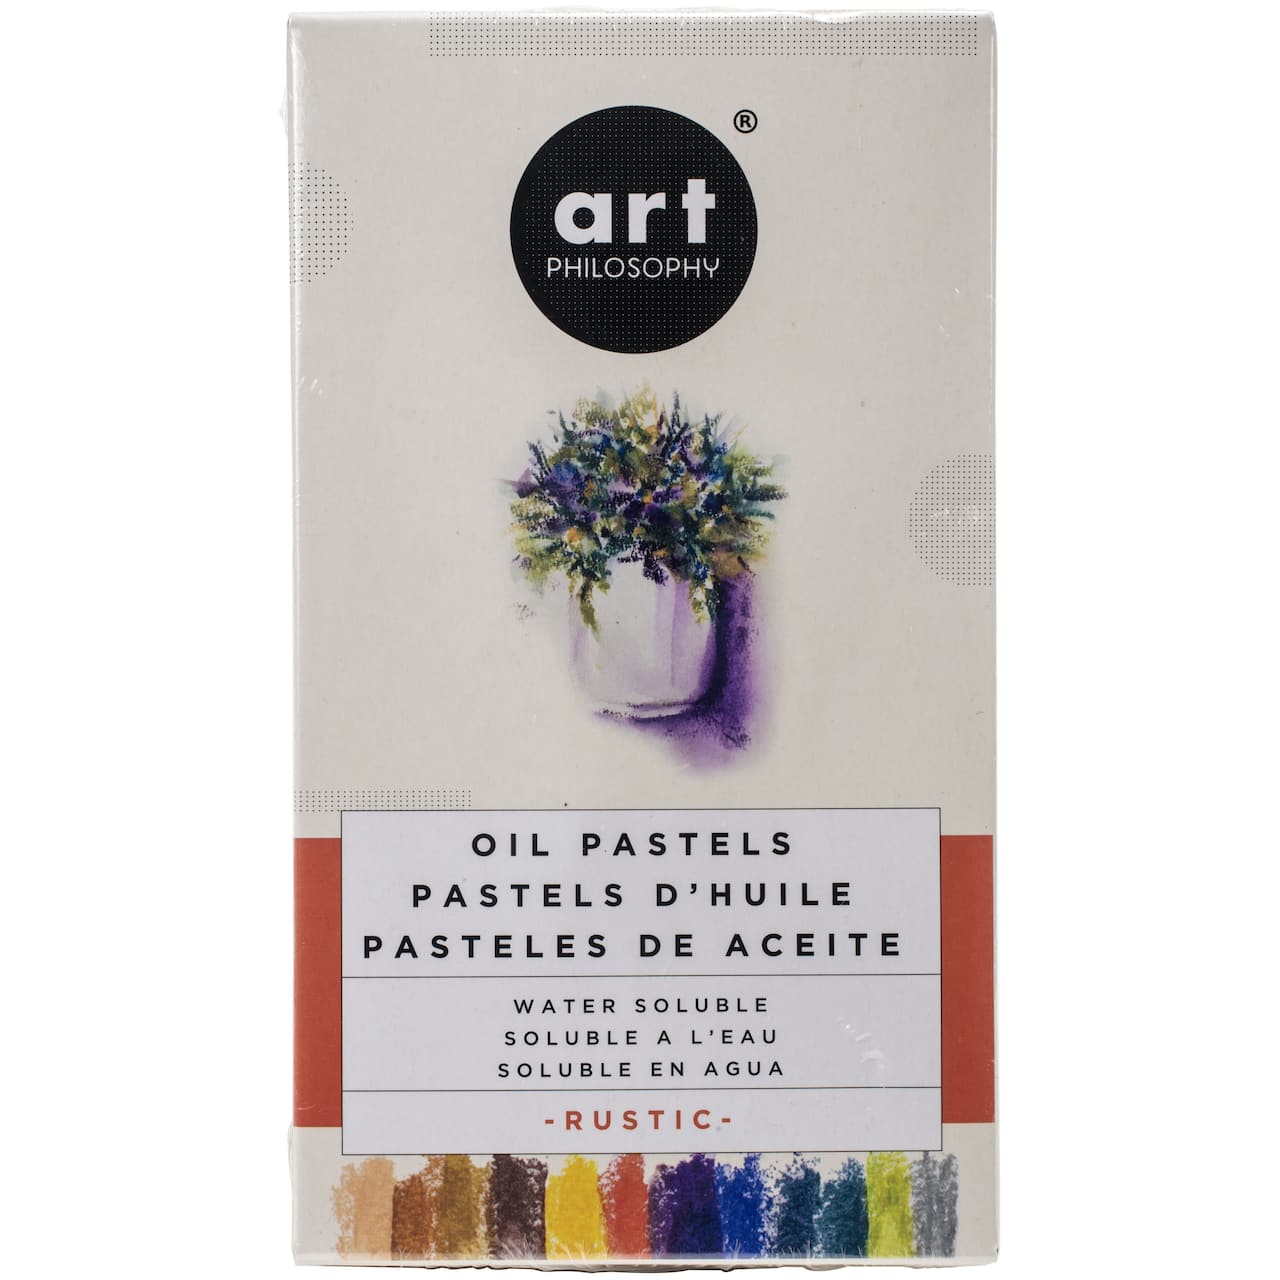 Prima® Art Philosophy® Rustic Water Soluble Oil Pastel Set